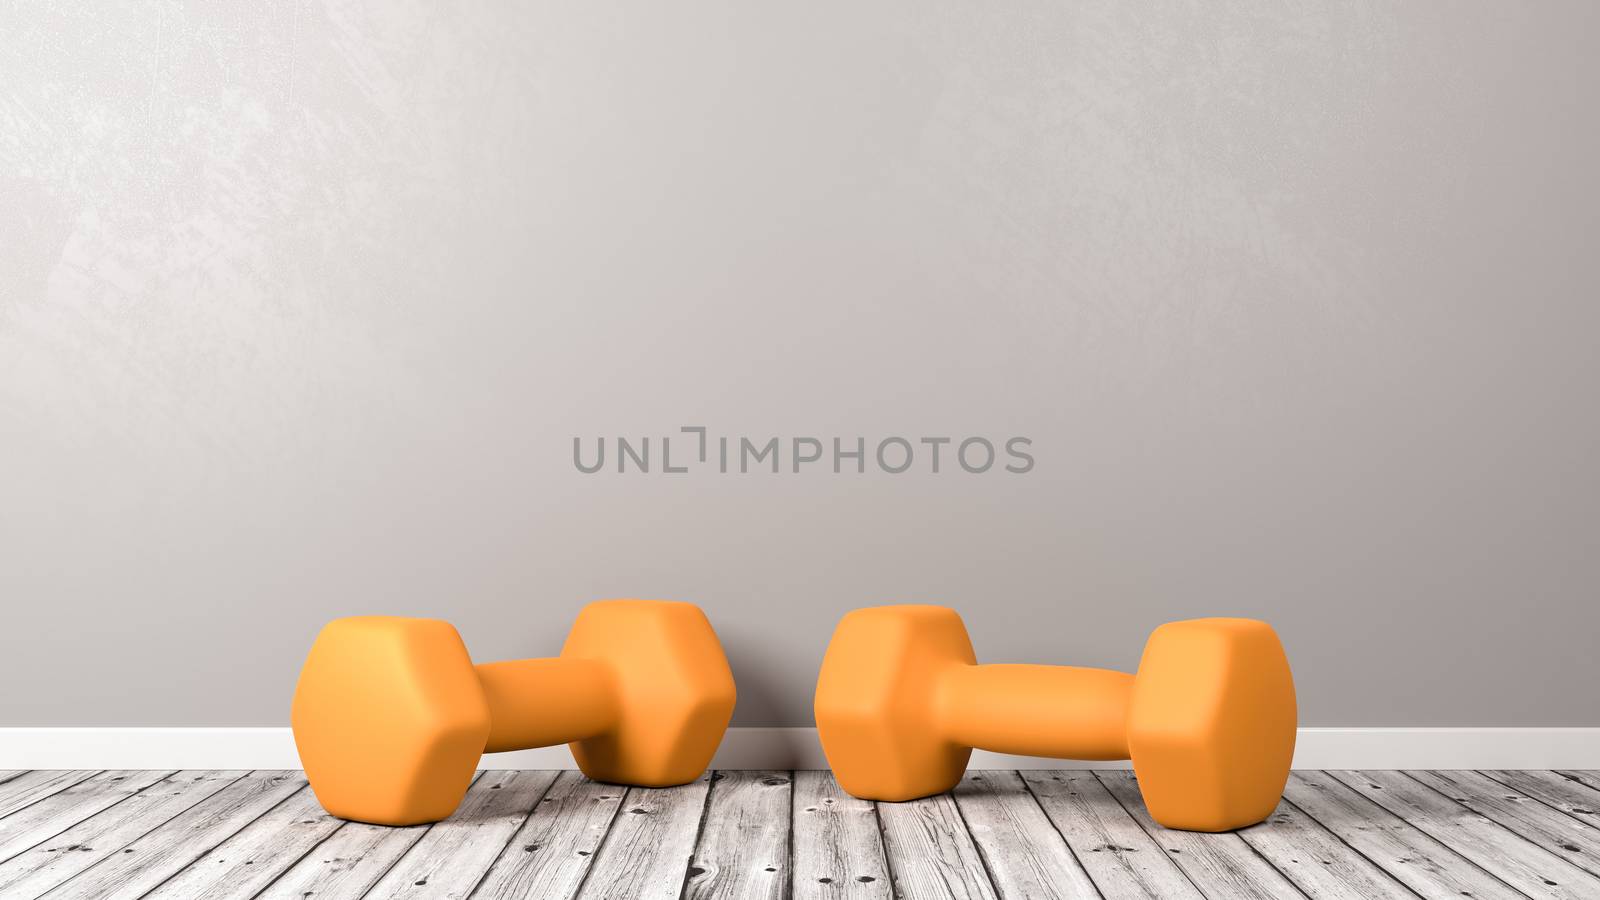 Orange Dumbbells on Wooden Floor in the Room by make